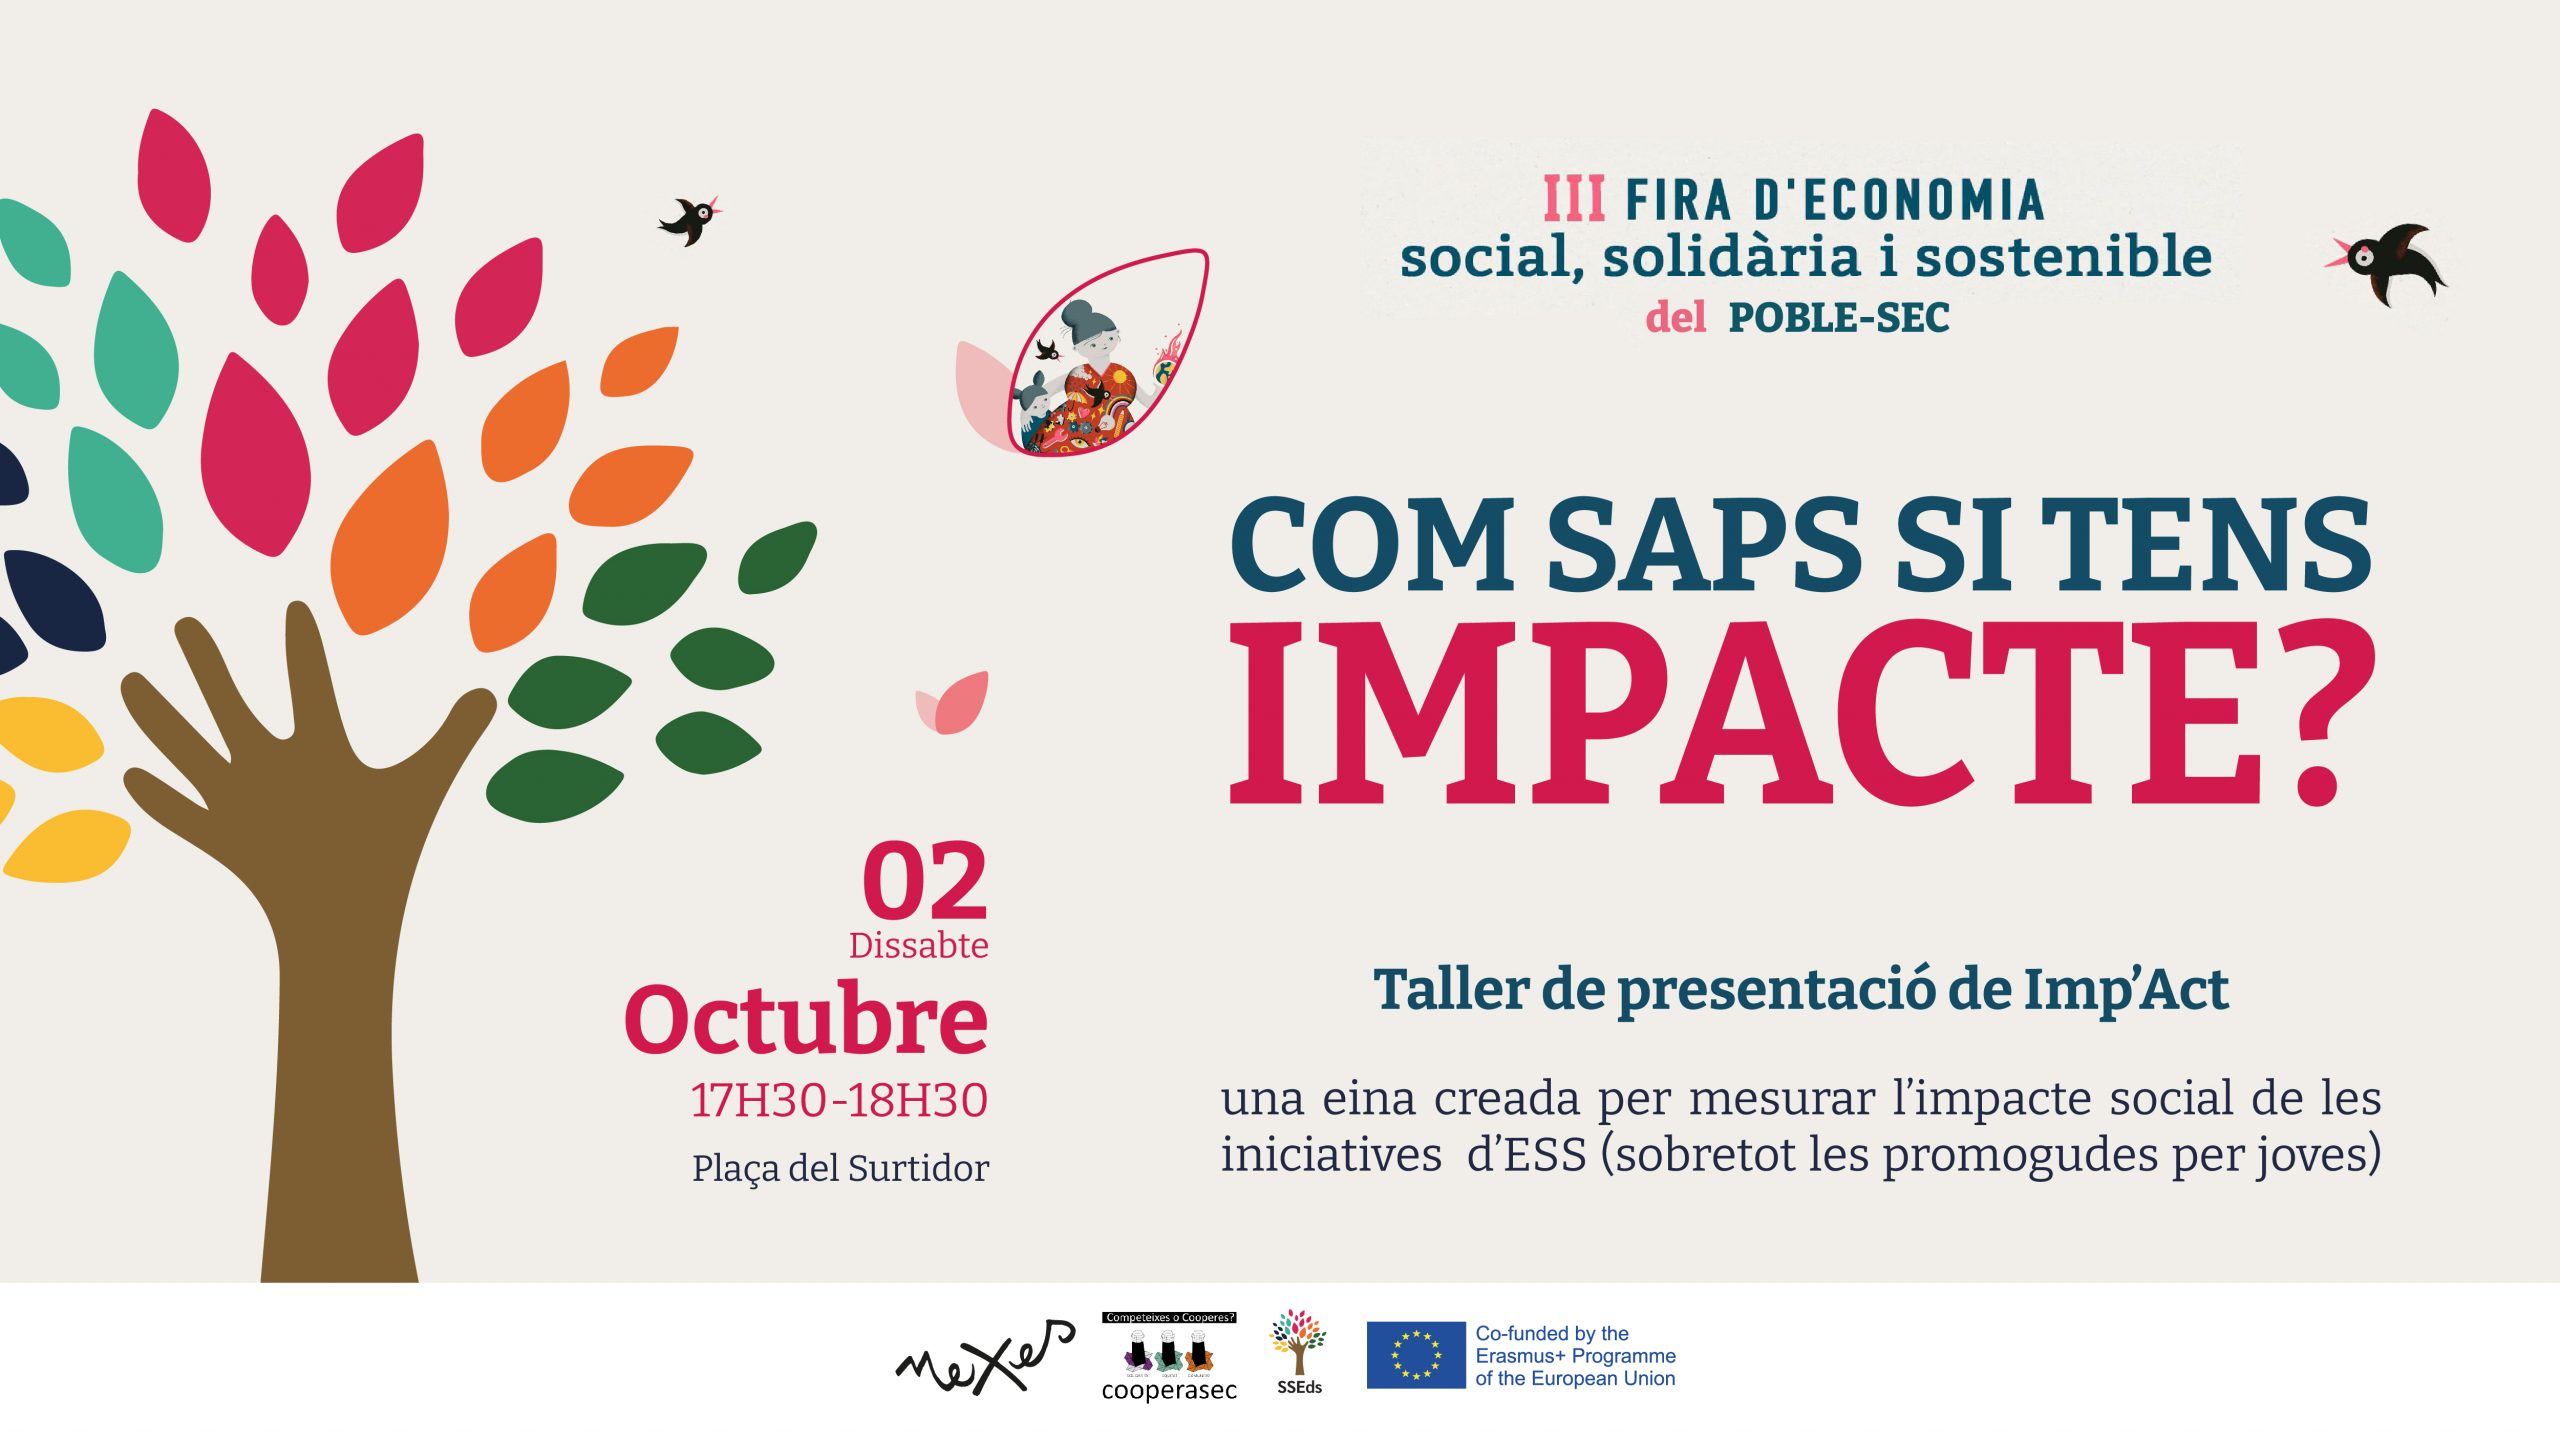 Presentation of the Imp’act Tool in the III Fira d’economia social, solidària i sostenible del Poble-sec